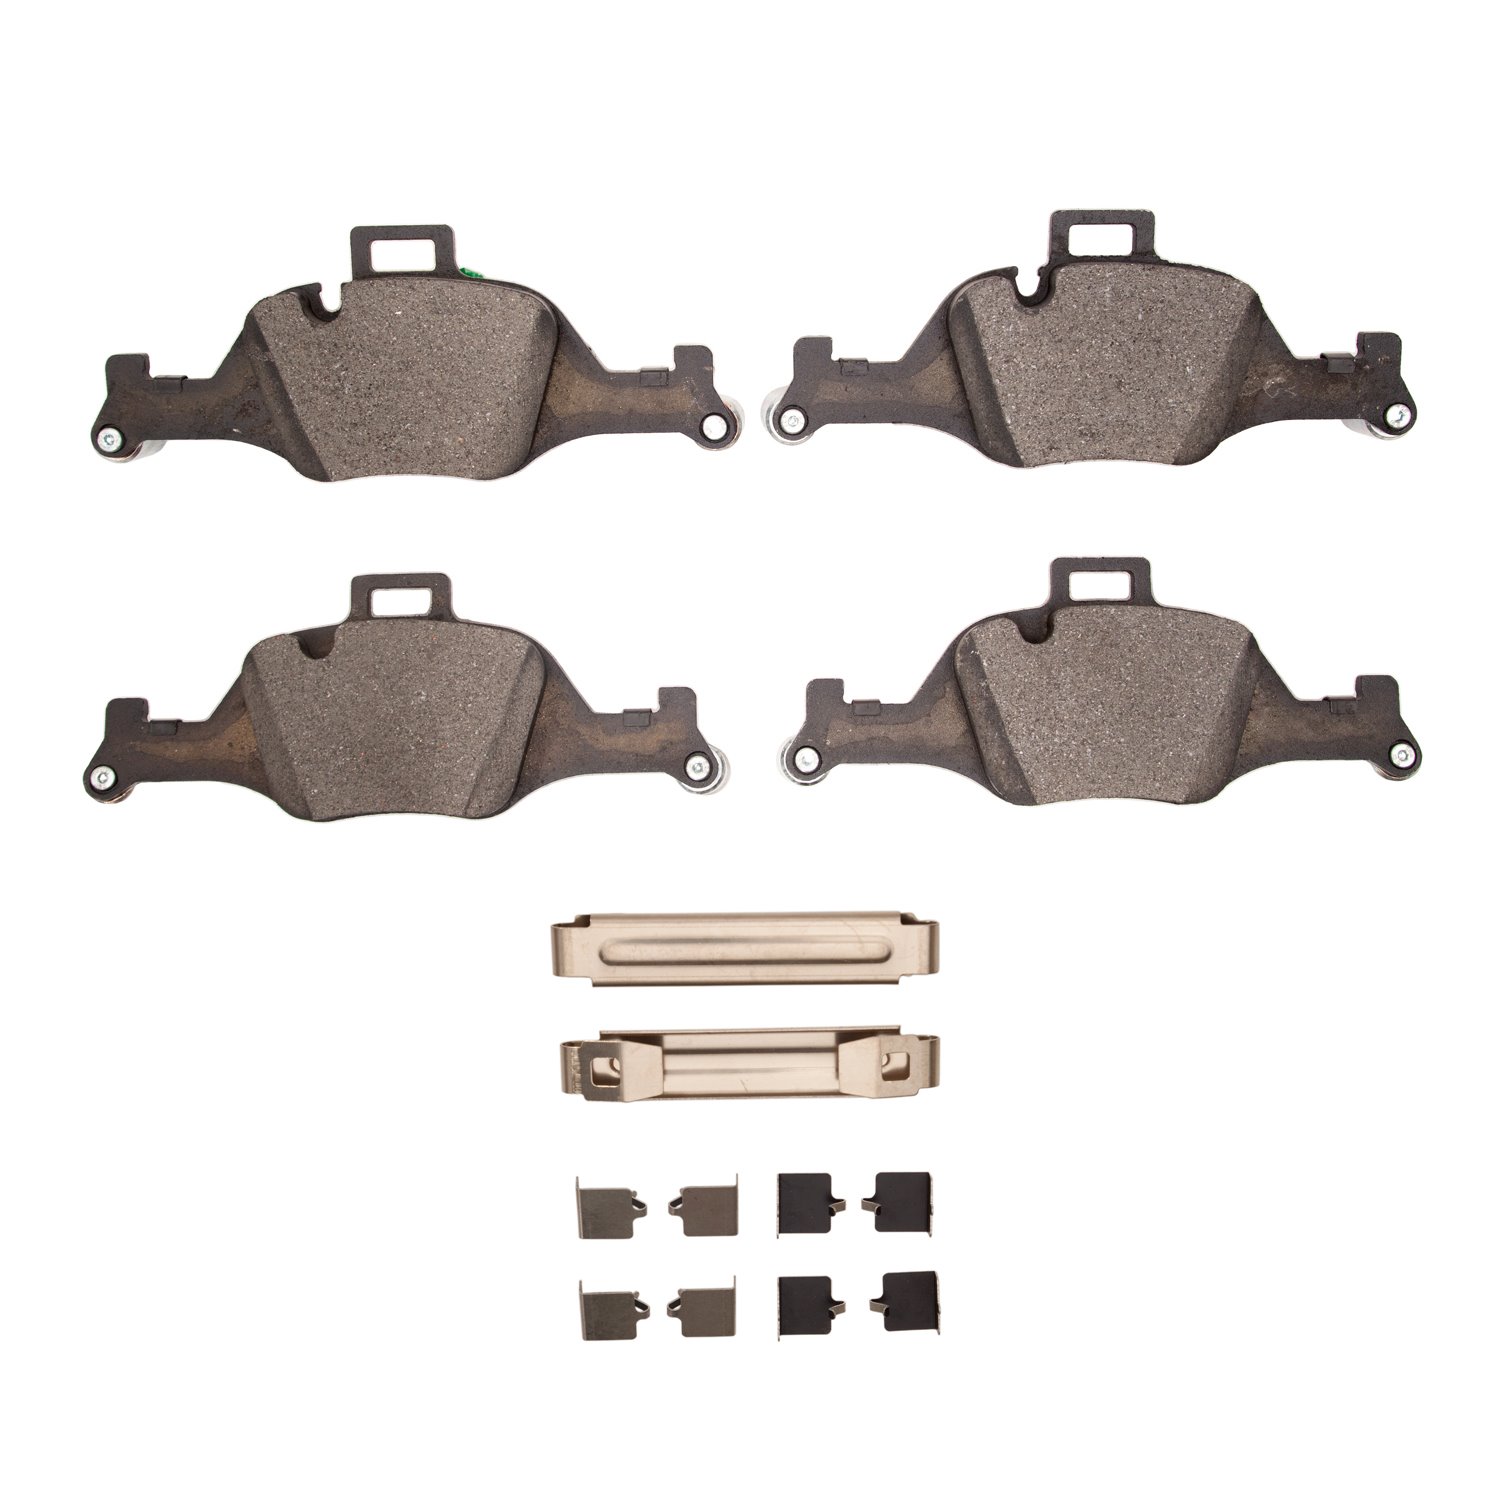 Euro Ceramic Brake Pads & Hardware Kit, Fits Select BMW, Position: Front